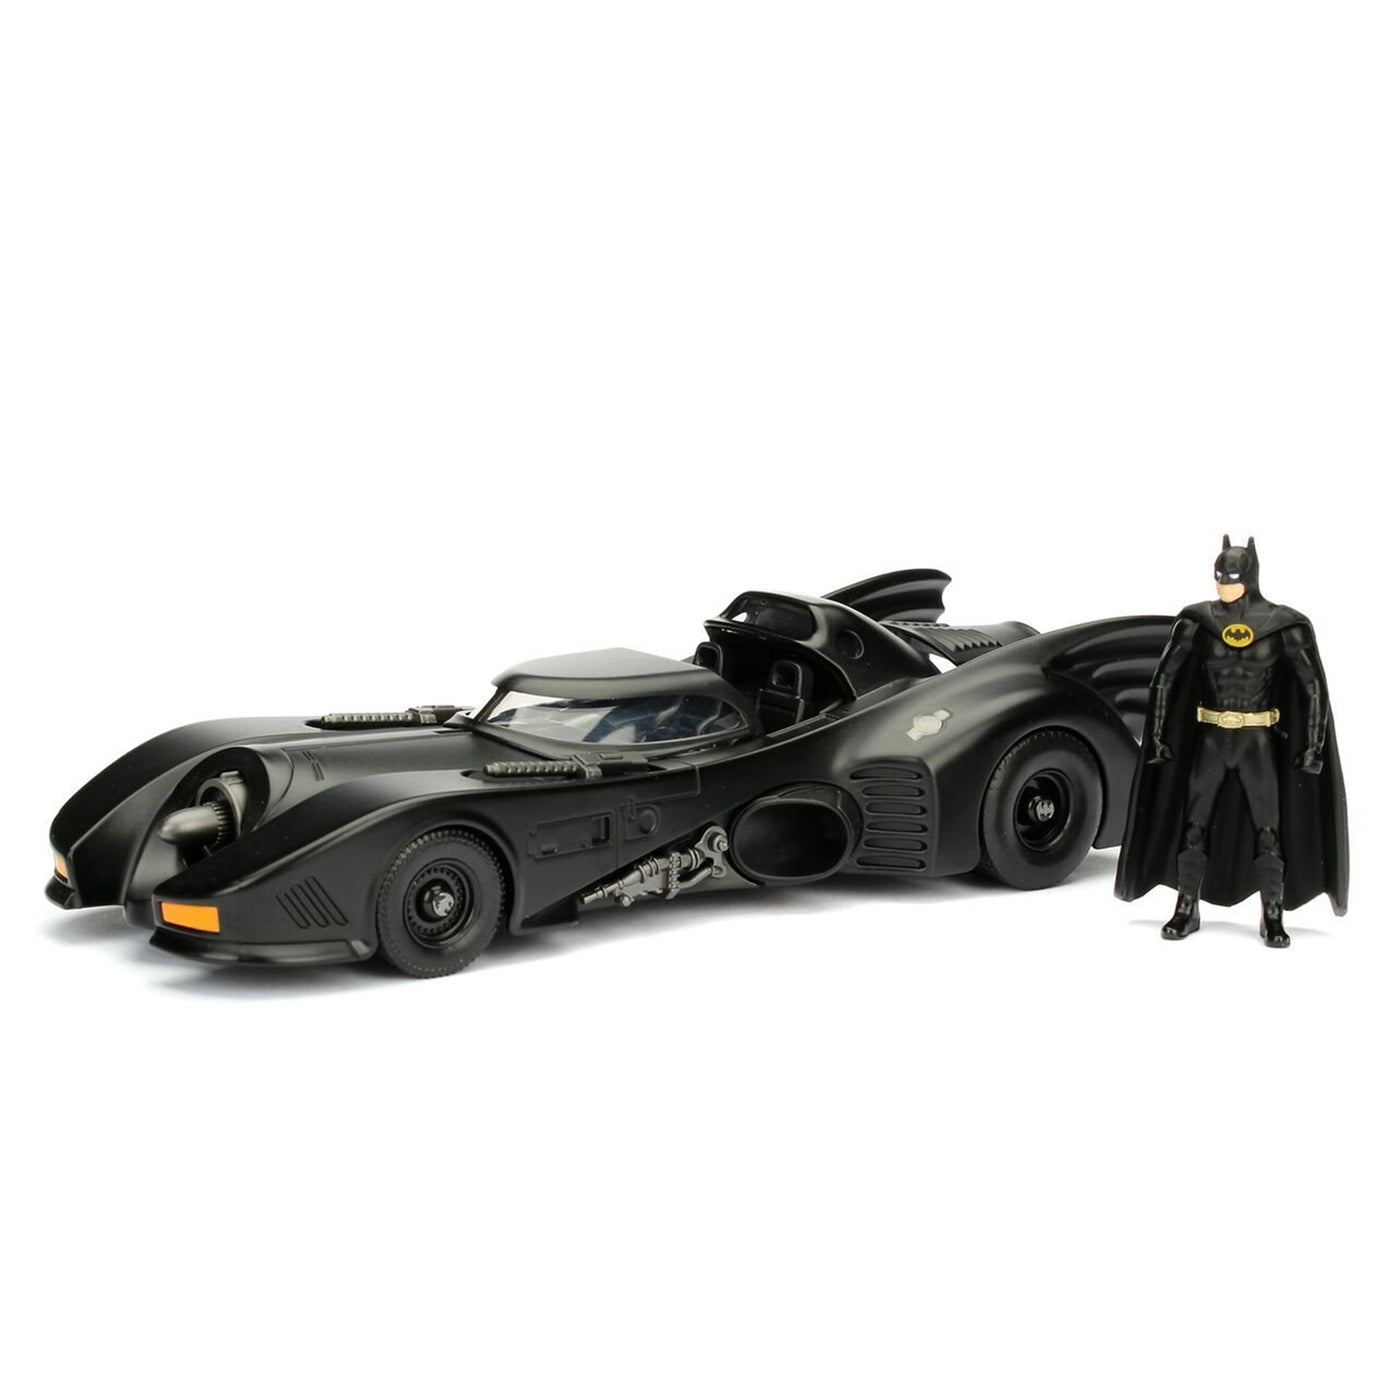 124 1989 Batman Batmobile